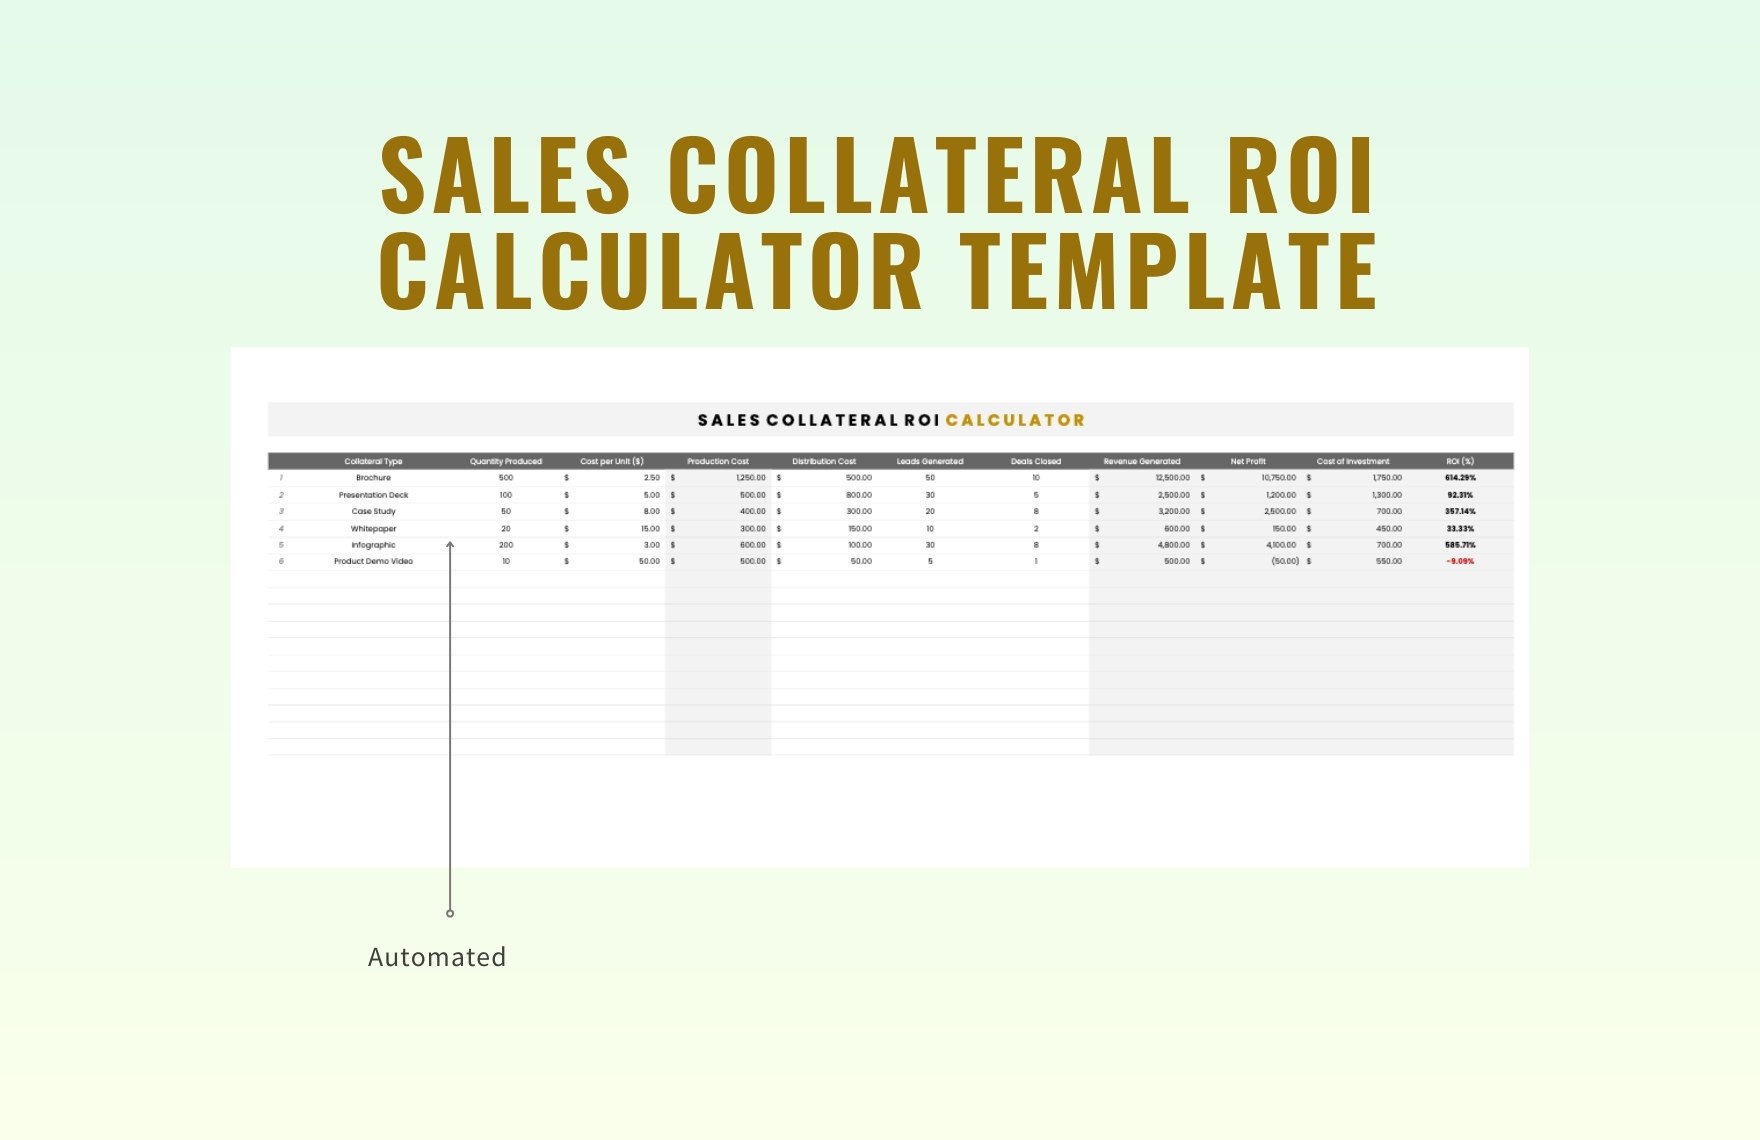 Sales Collateral ROI Calculator Template